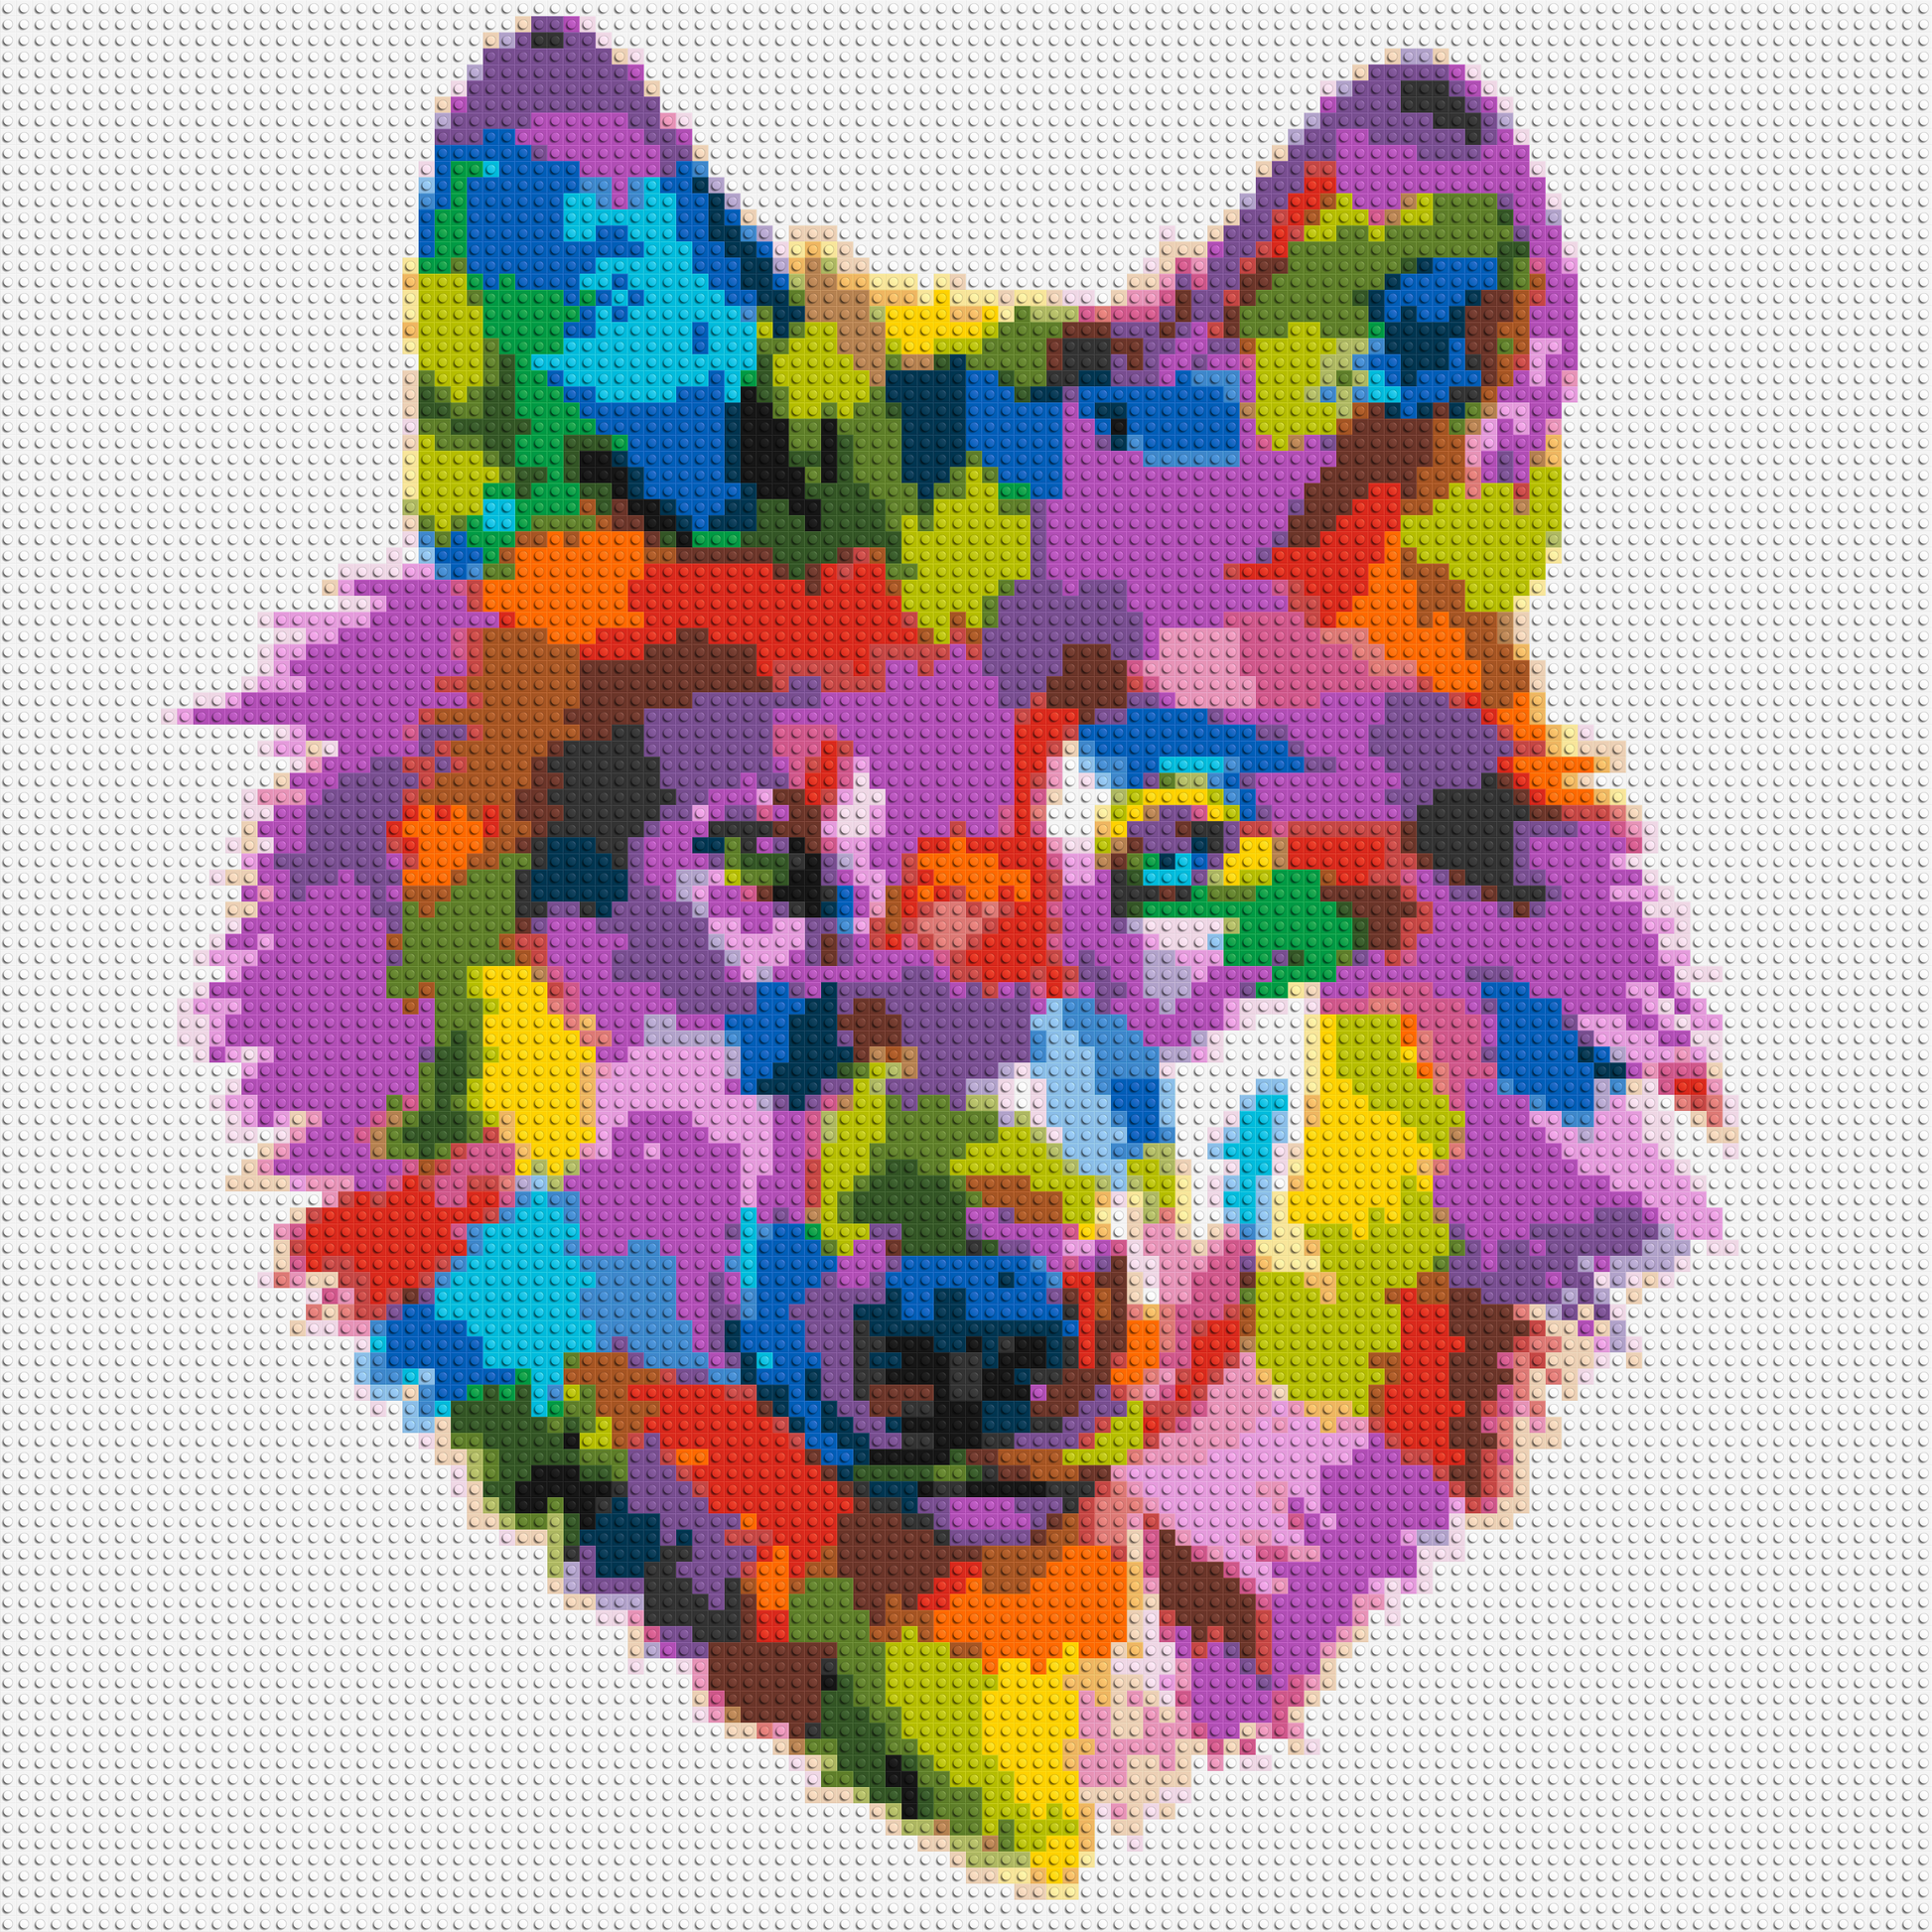 Wolf Colourful Pop Art - Brick Art Mosaic Kit 5x5 large